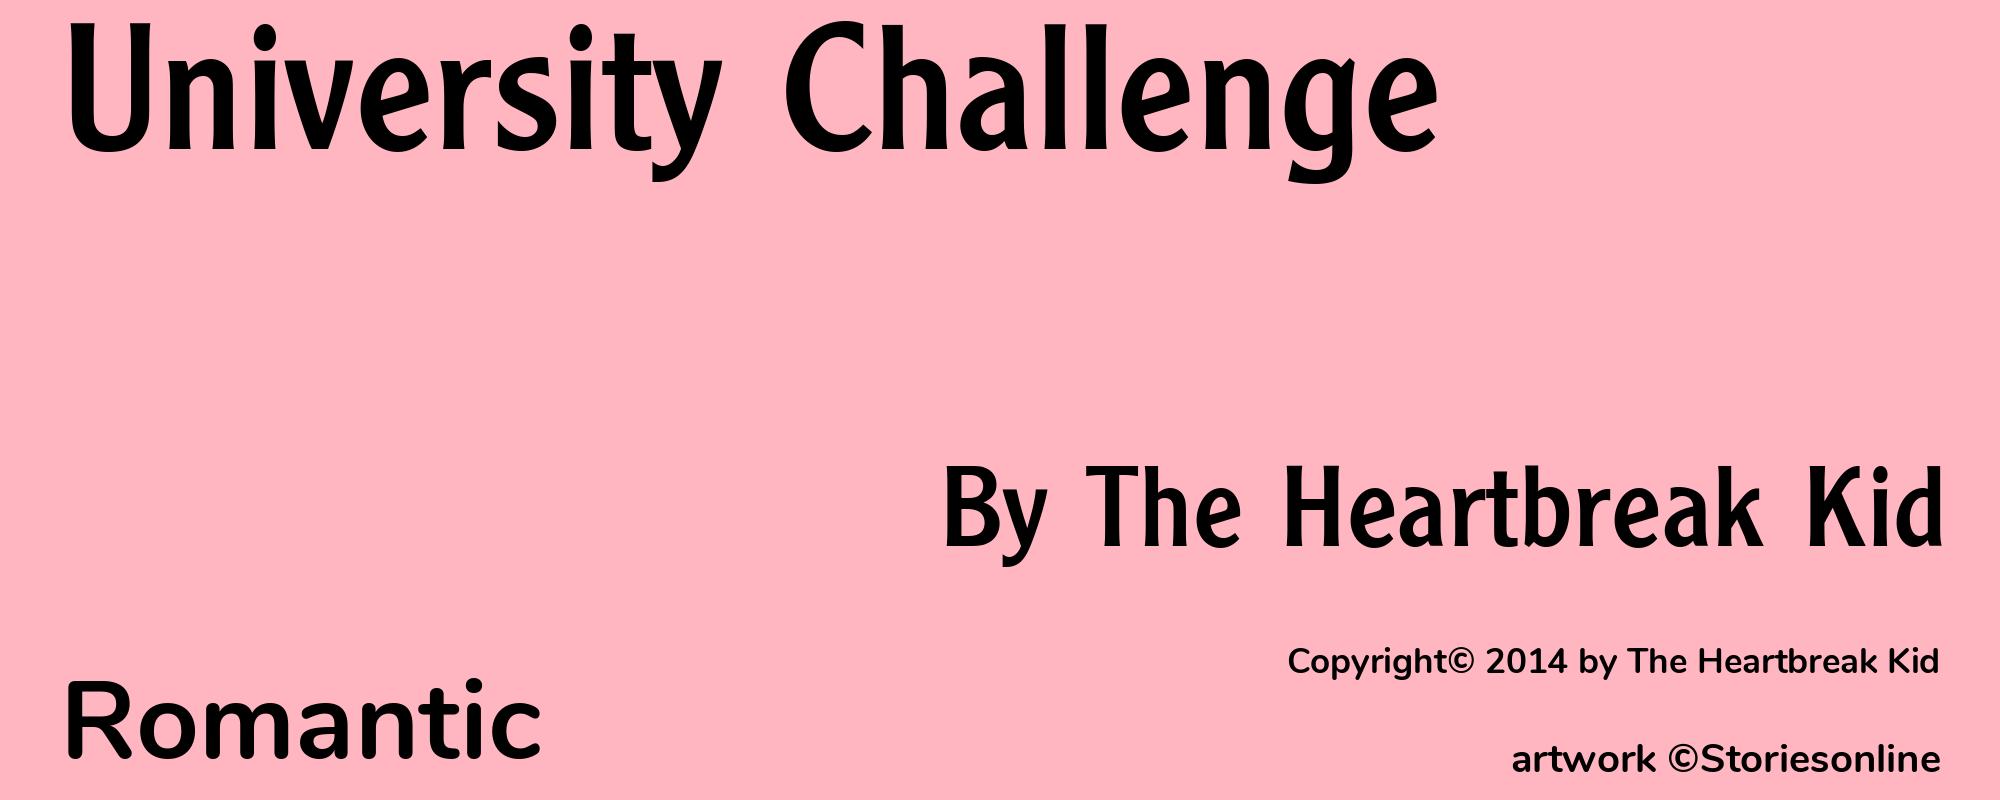 University Challenge - Cover